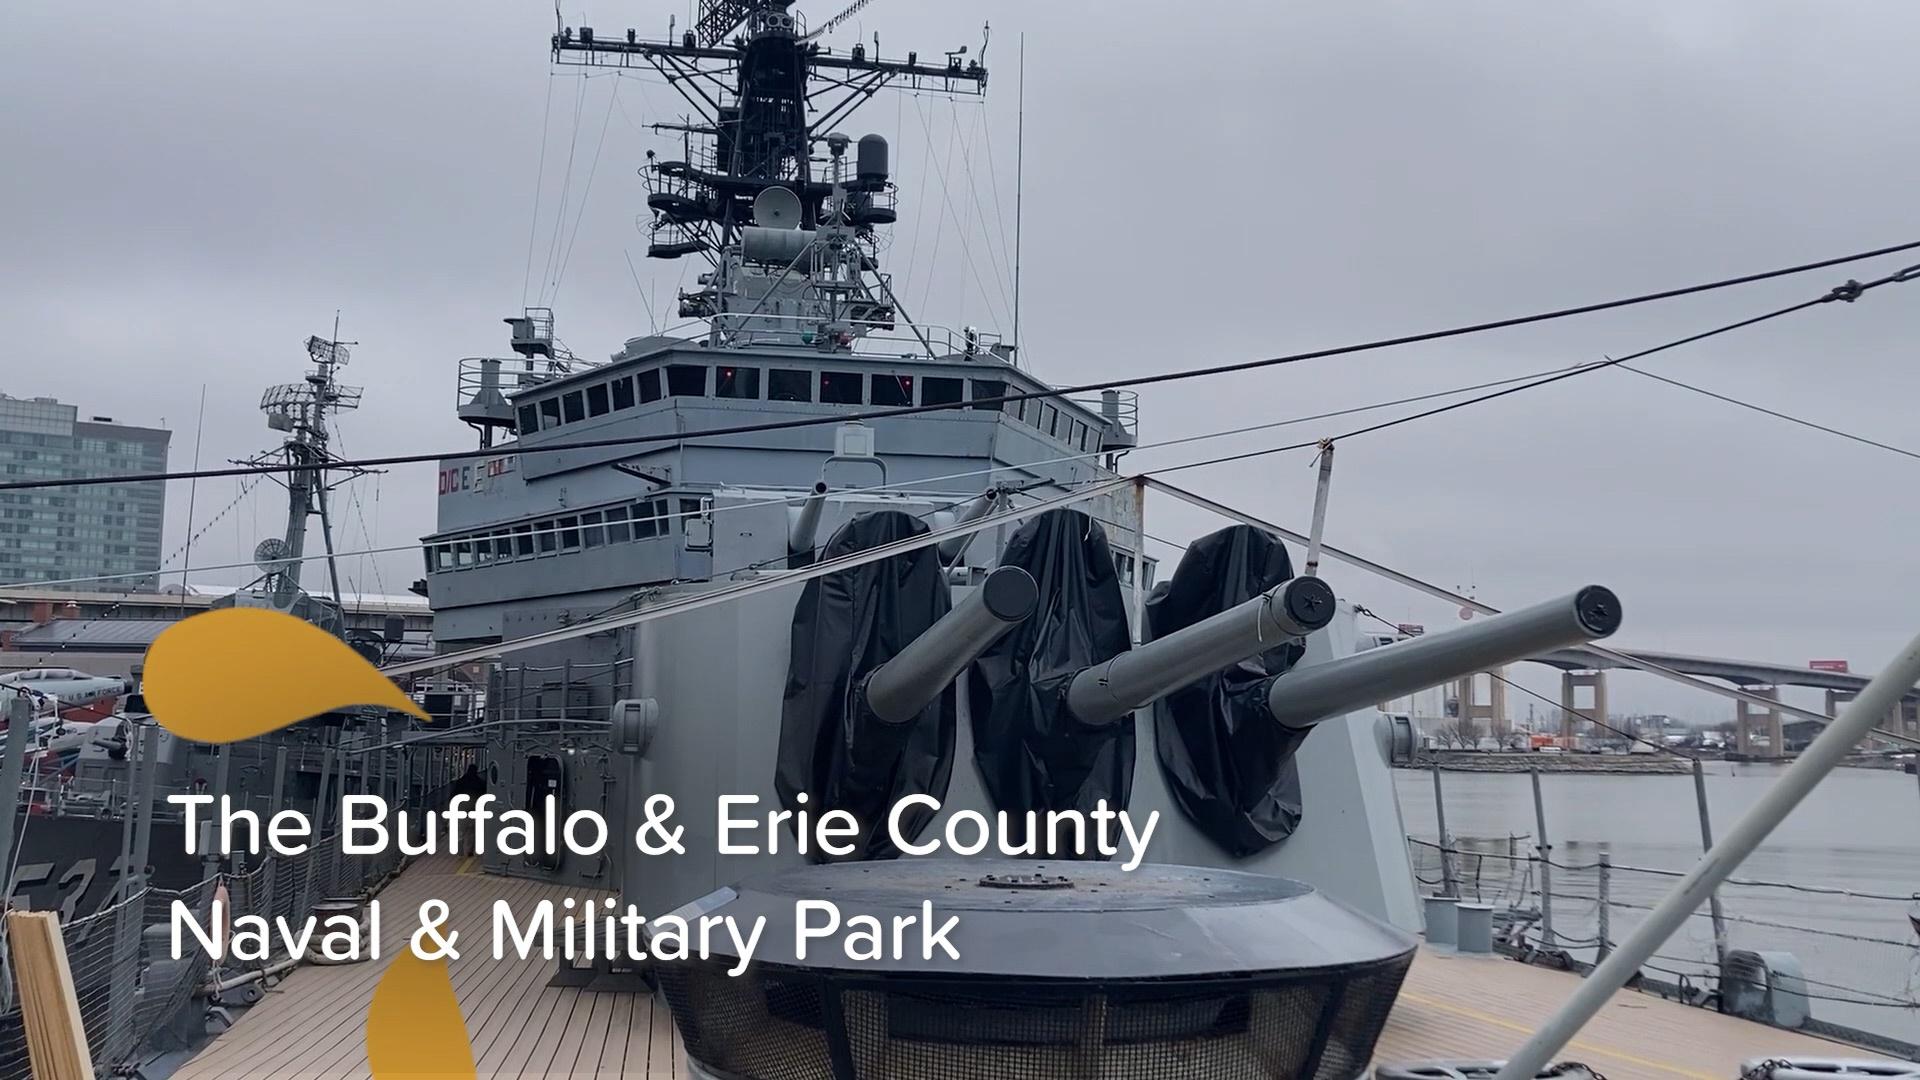 The Buffalo & Erie County Naval & Military Park